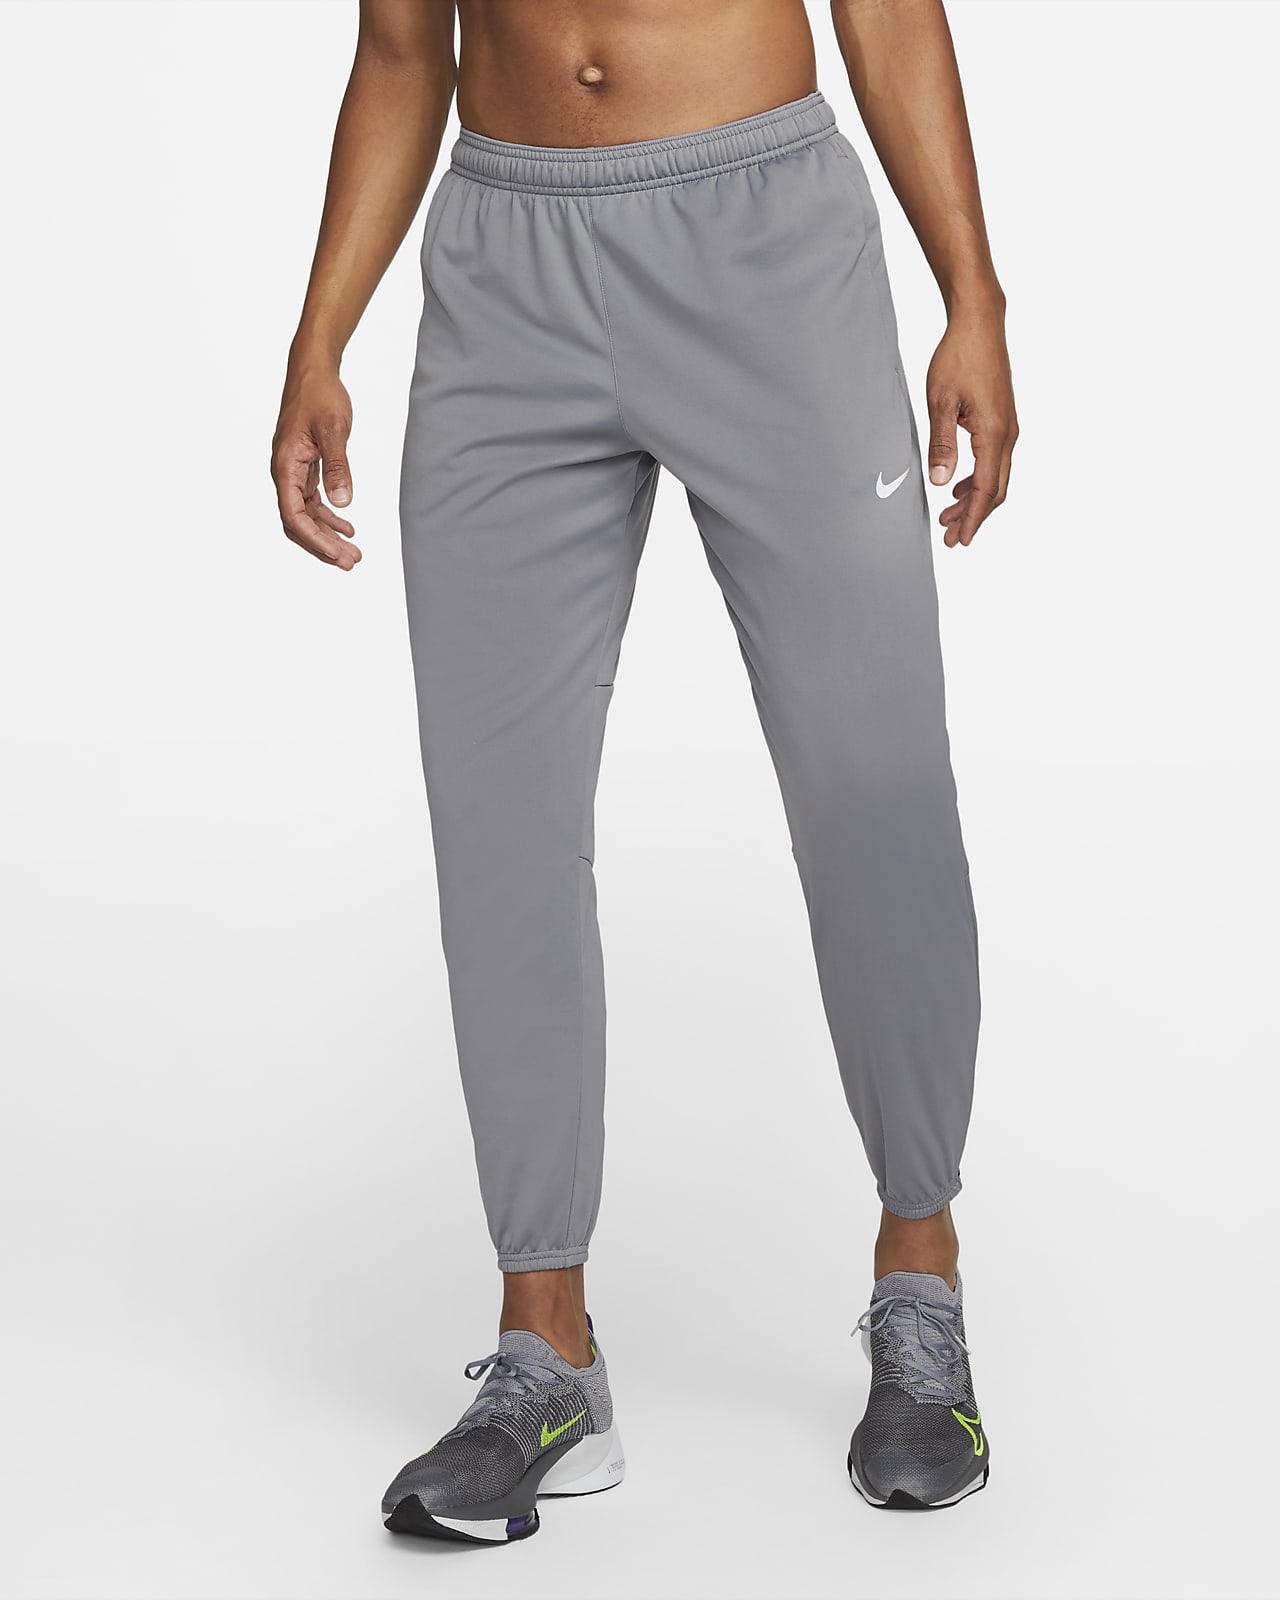 Men’s Nike polyester jogging pants - academico.unemat.br